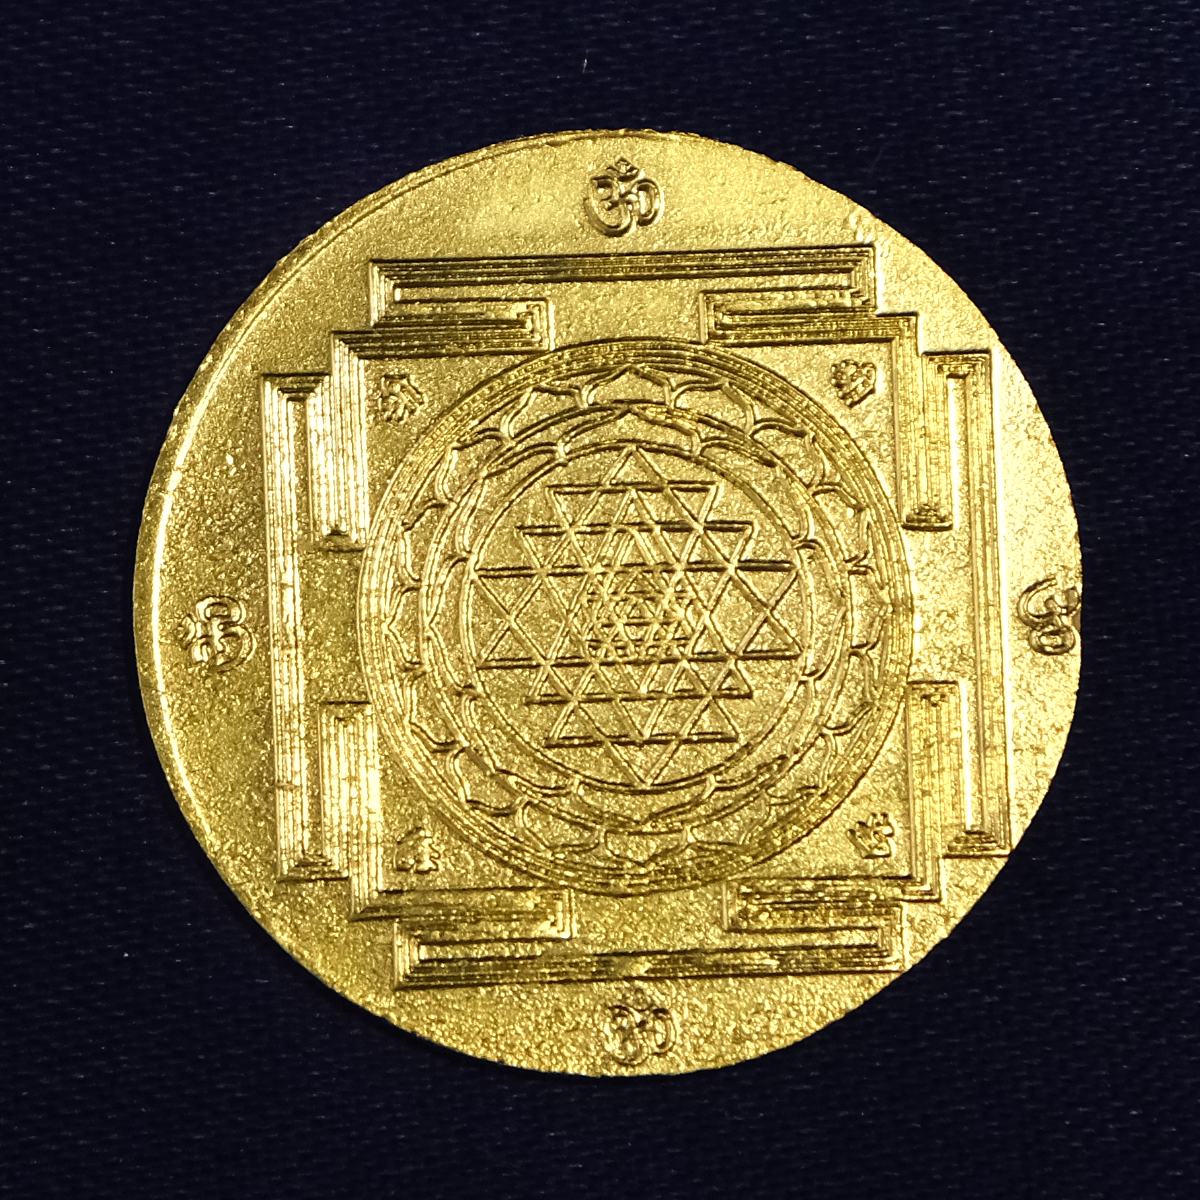 Ashtalakshmi Gold Coin - Pack of 20